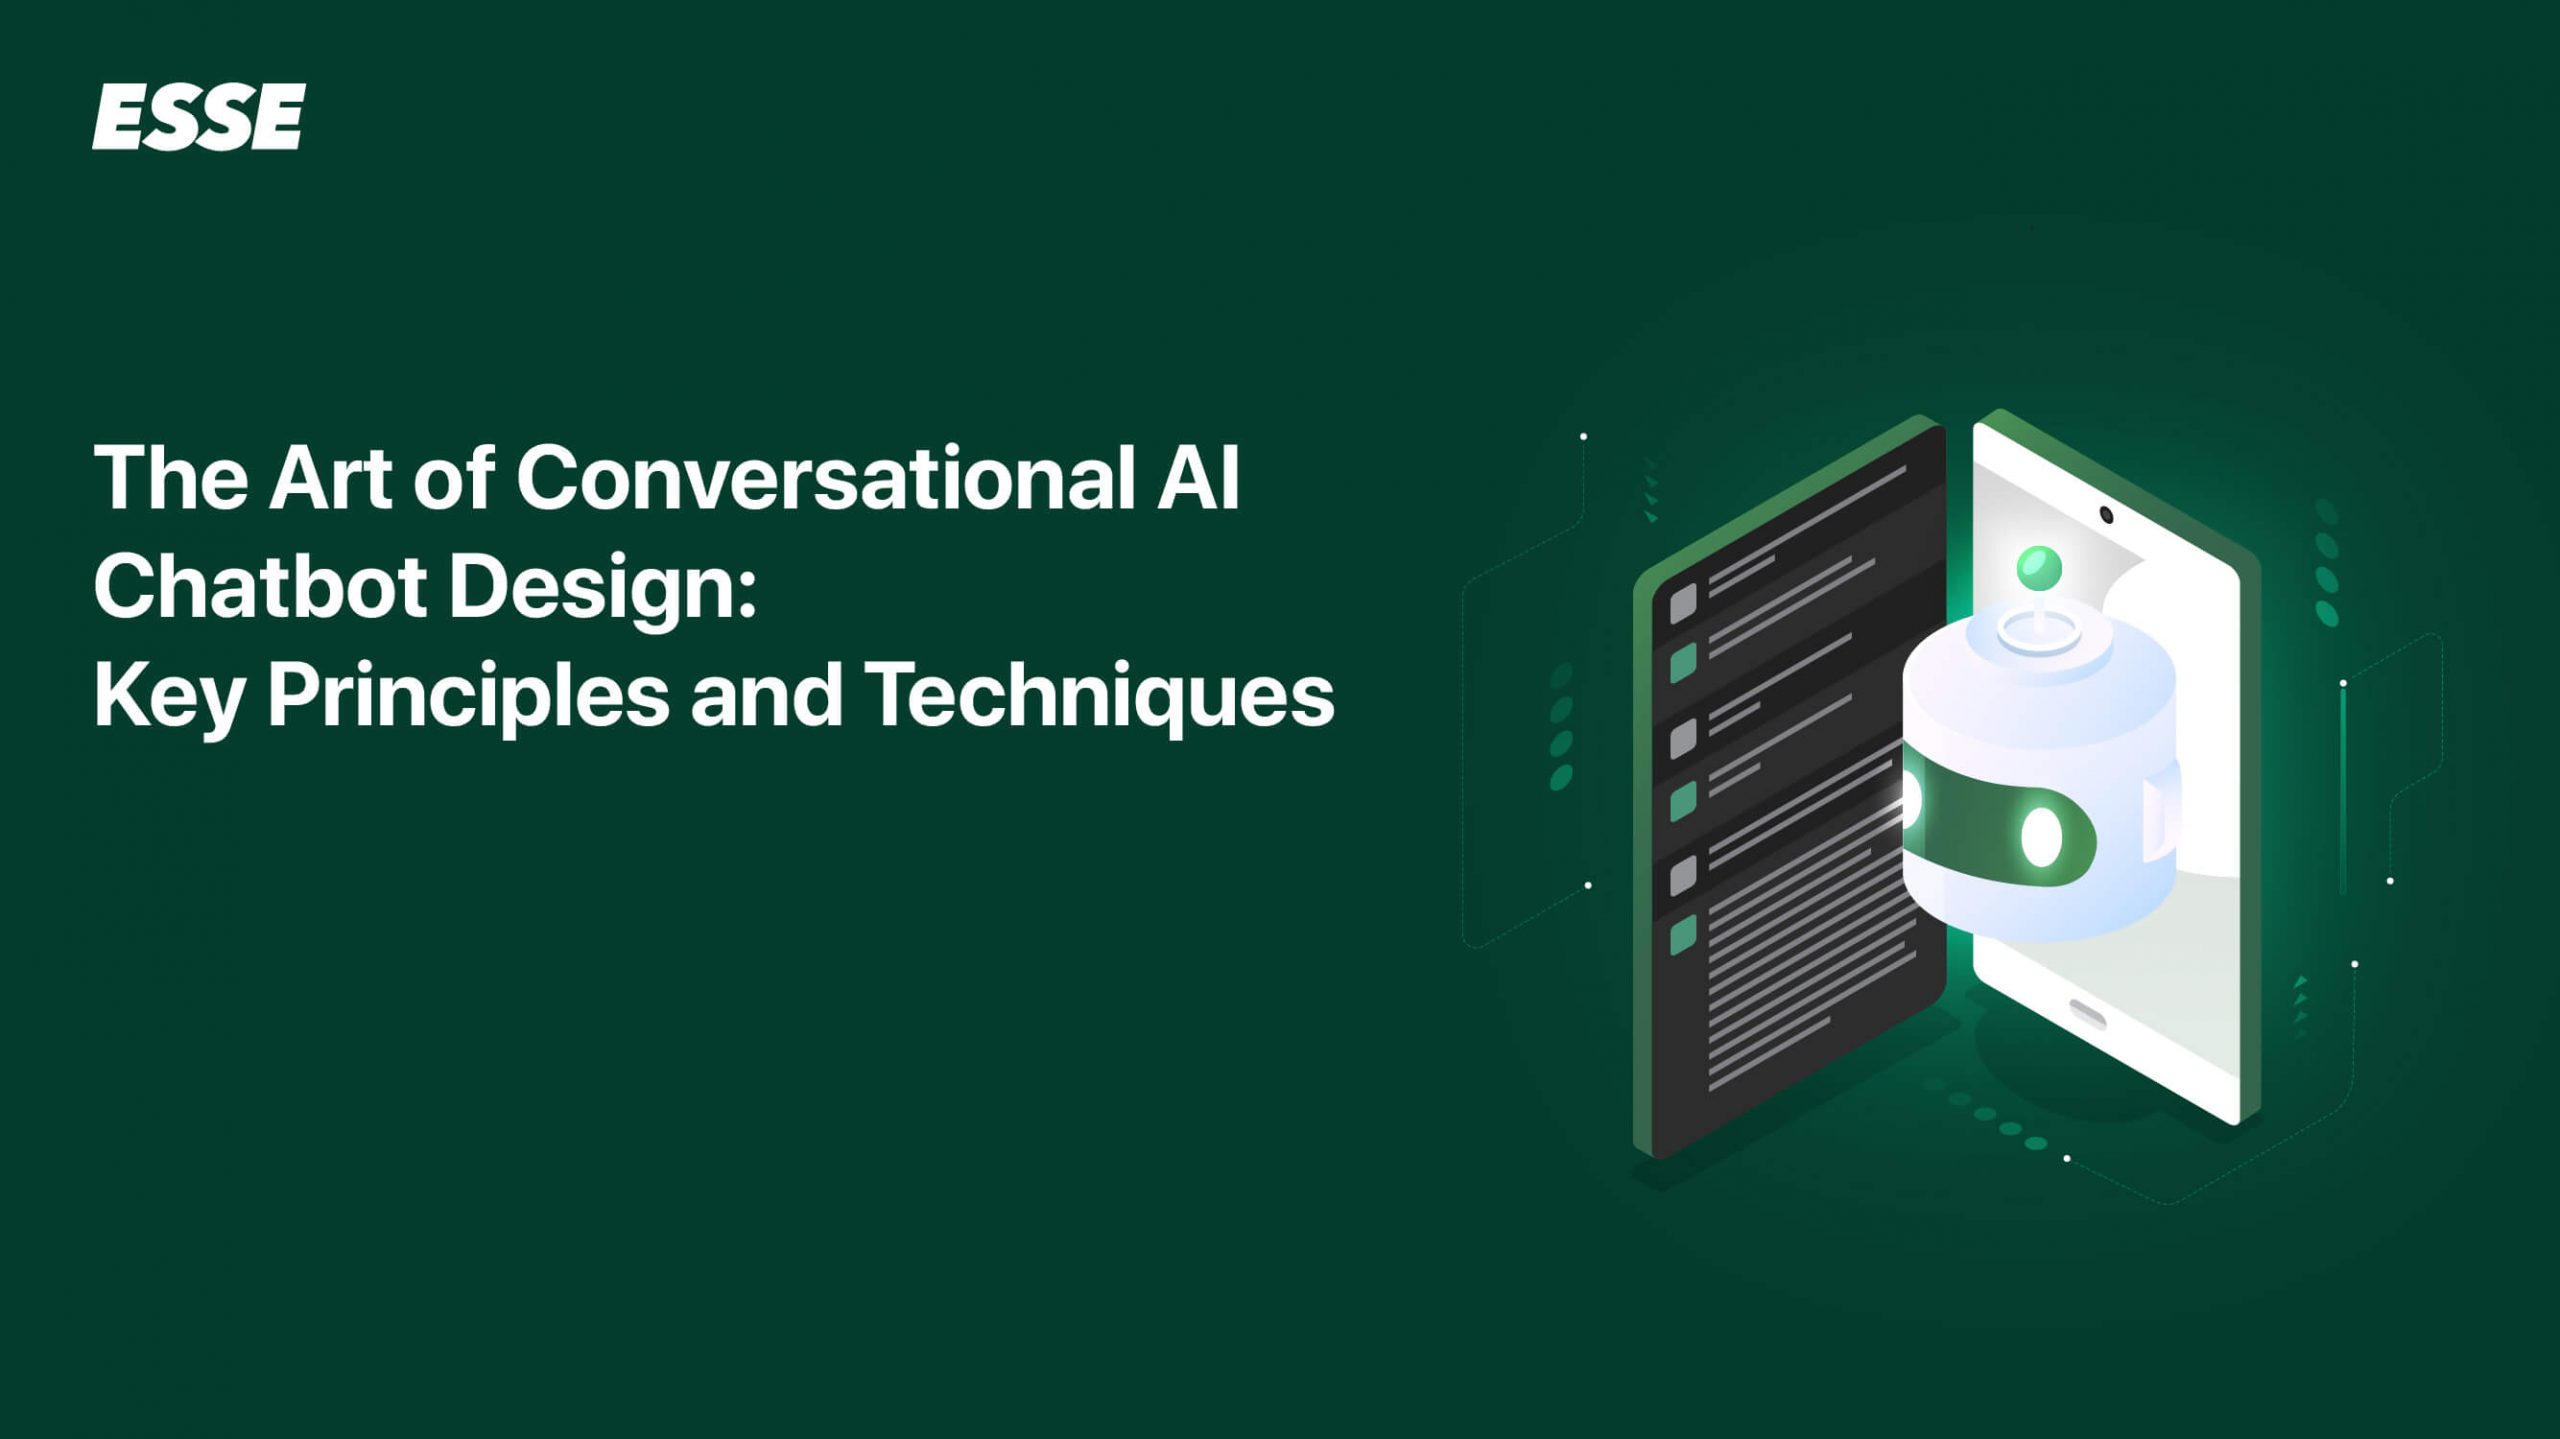 The Art of Conversational AI Chatbot Design: Key Principles and Techniques